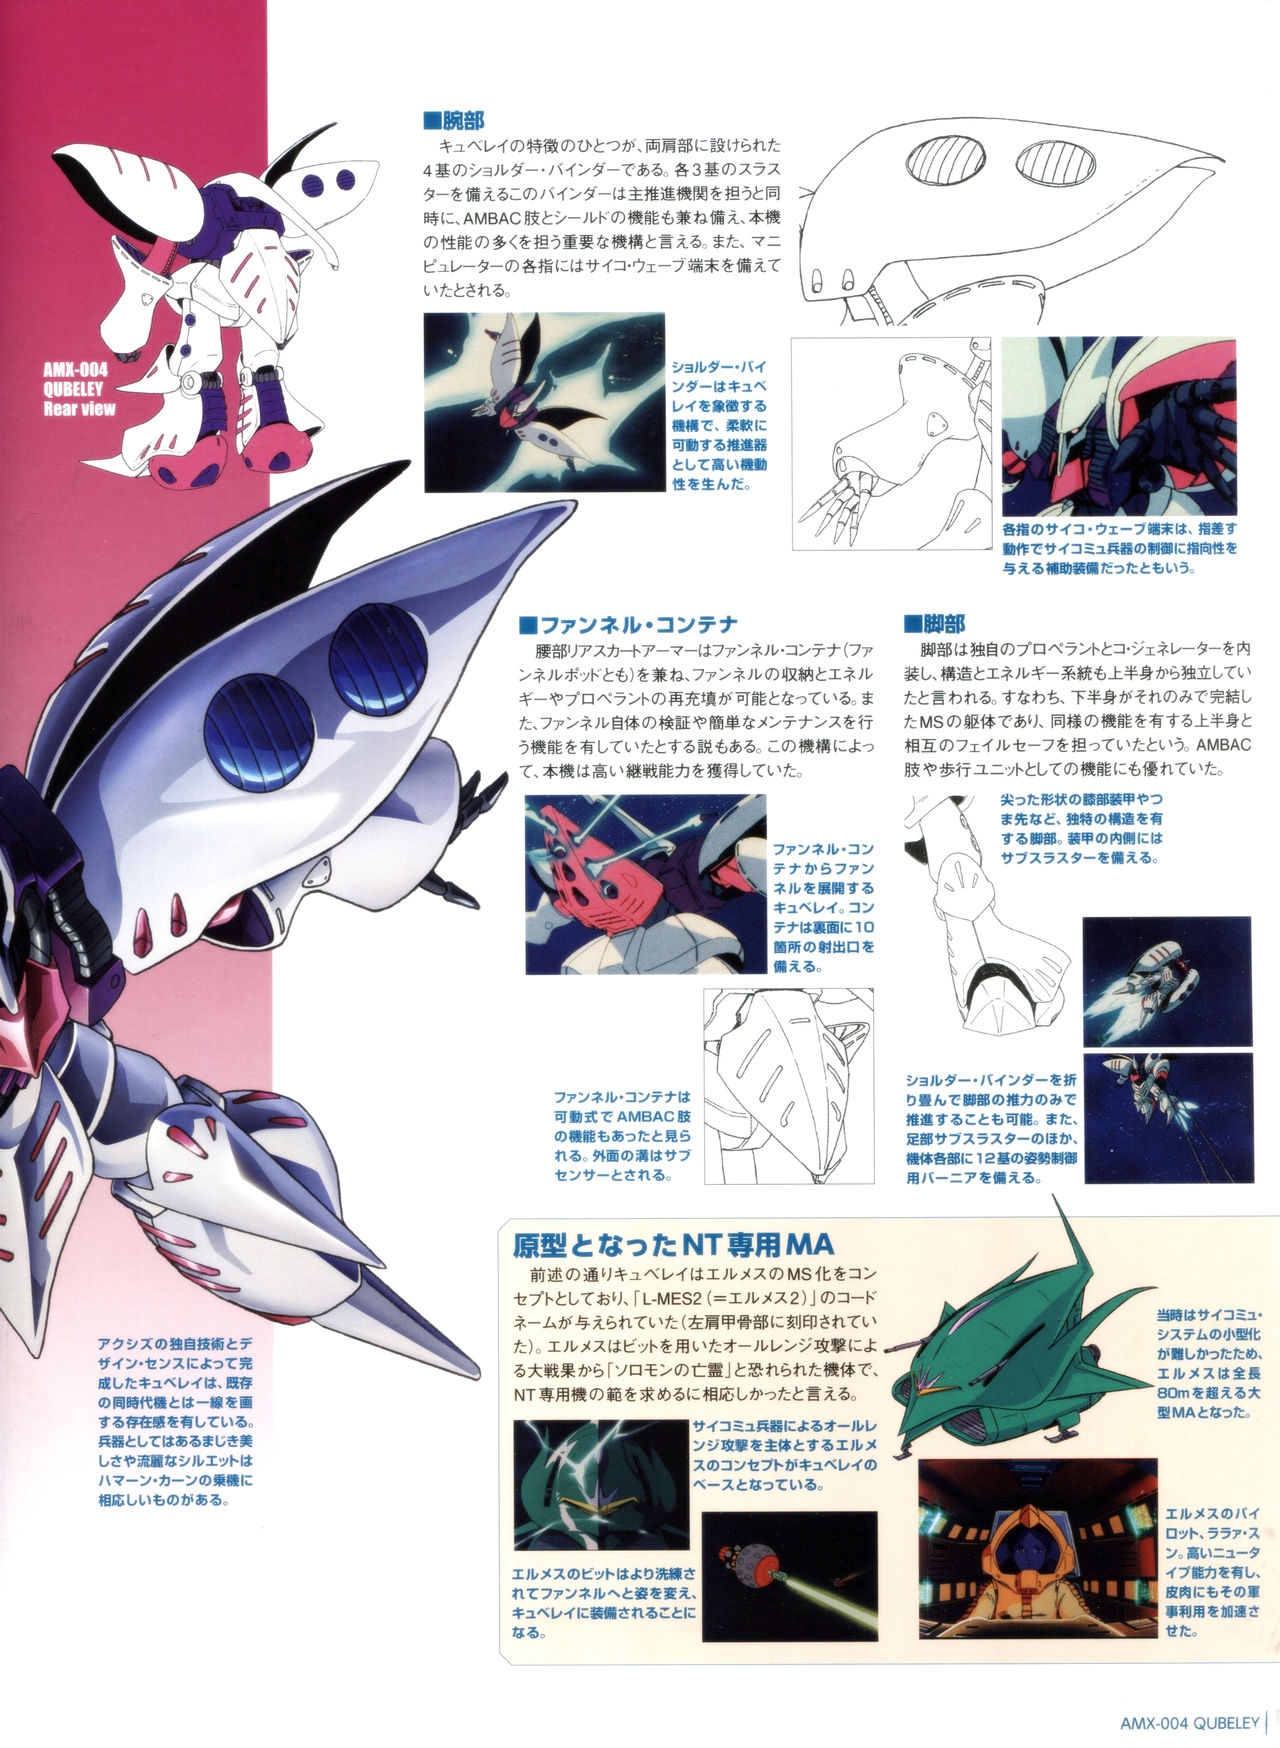 Gundam Mobile Suit Bible 17 8